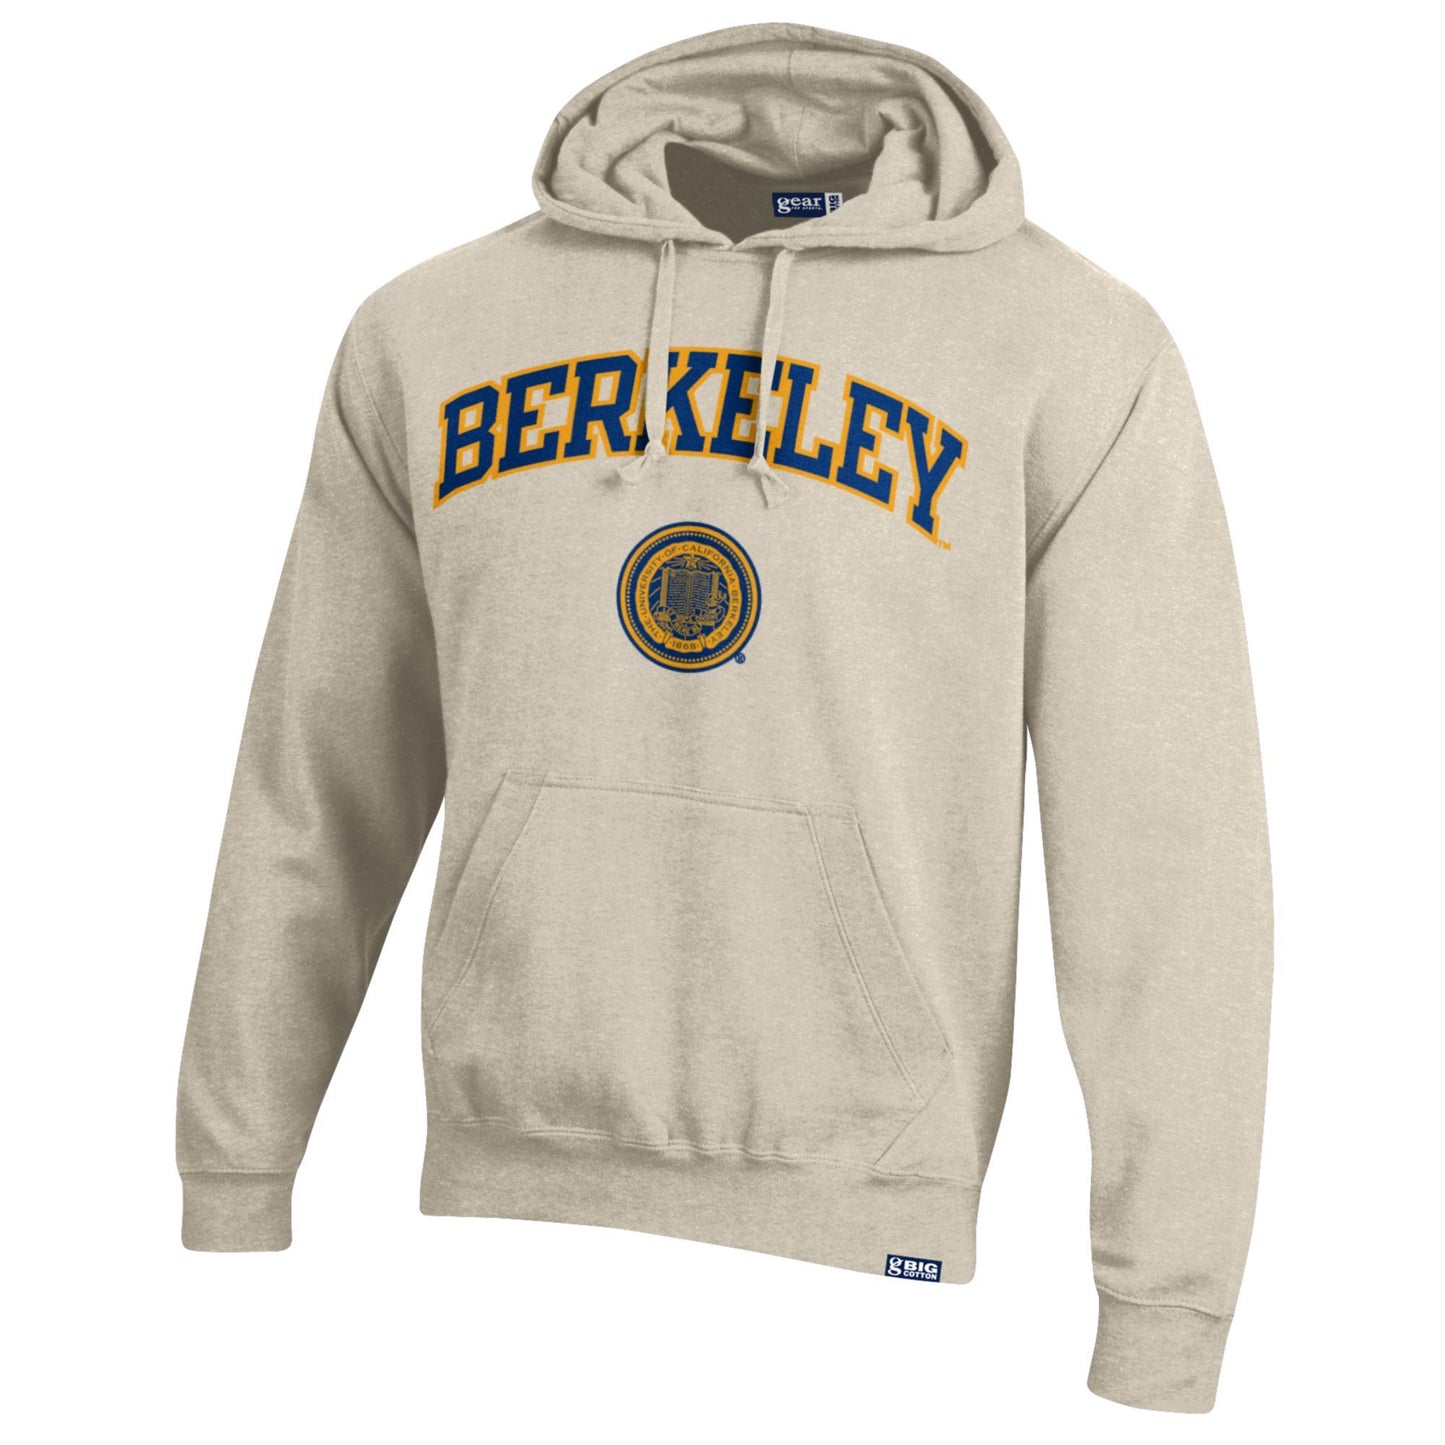 U.C. Berkeley arch & seal rich cotton double applique hoodie sweatshirt-Oatmeal-Shop College Wear